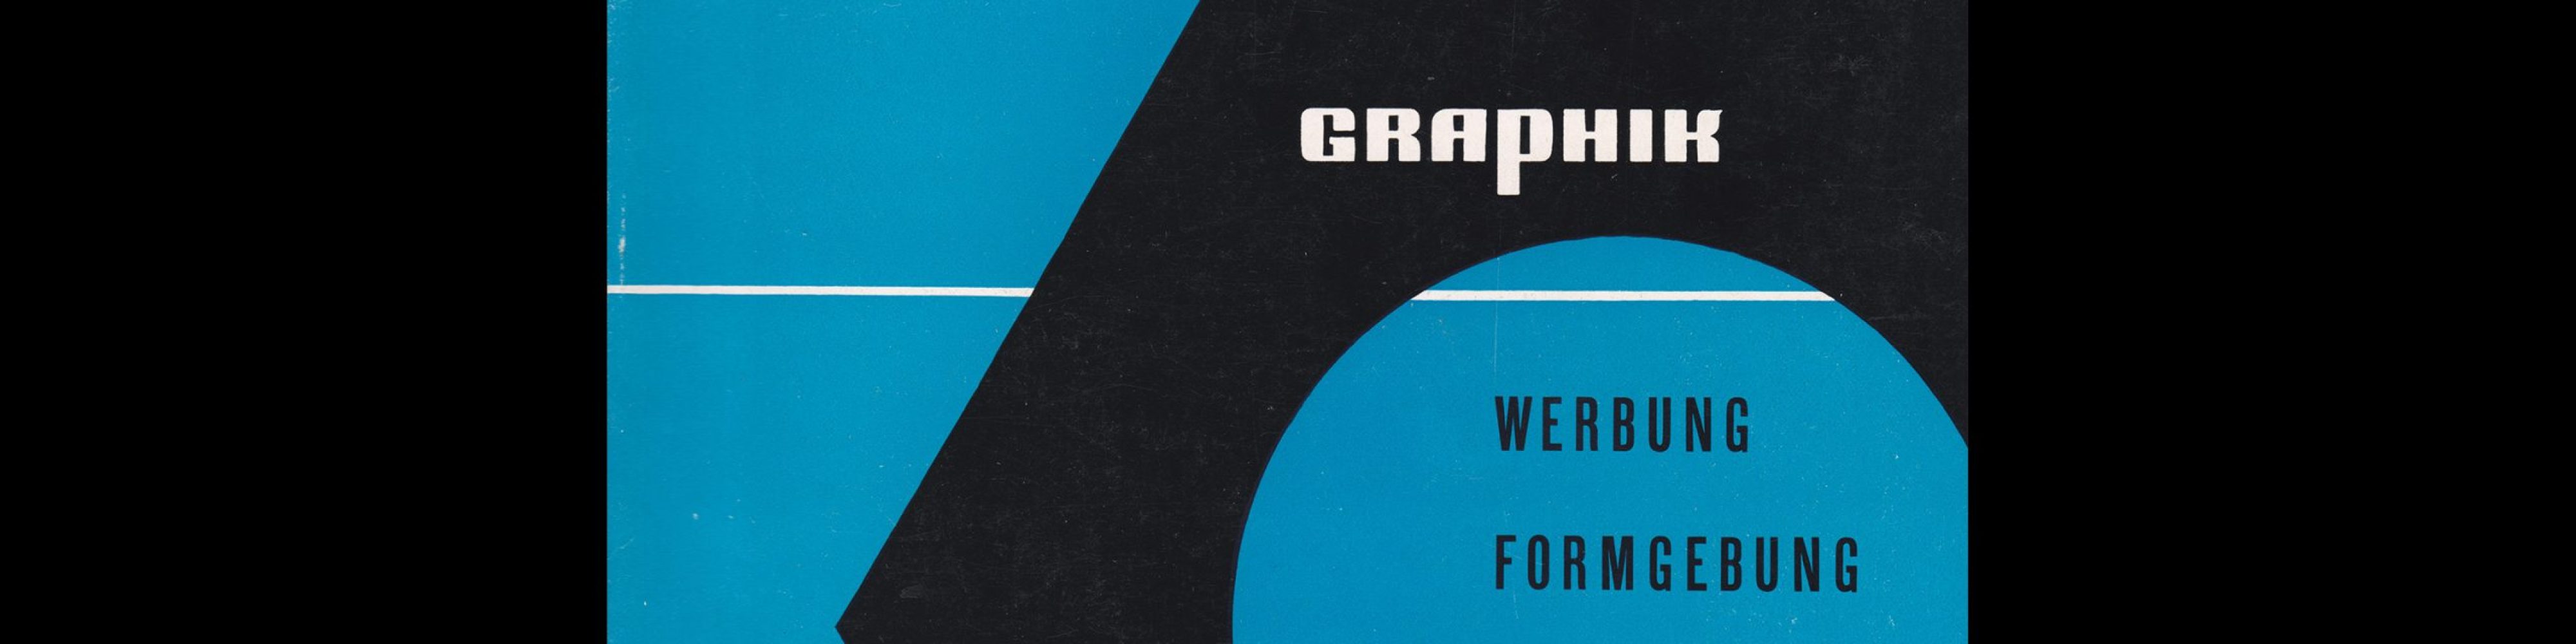 Graphik - Werbung + Formgebung, 10, 1953